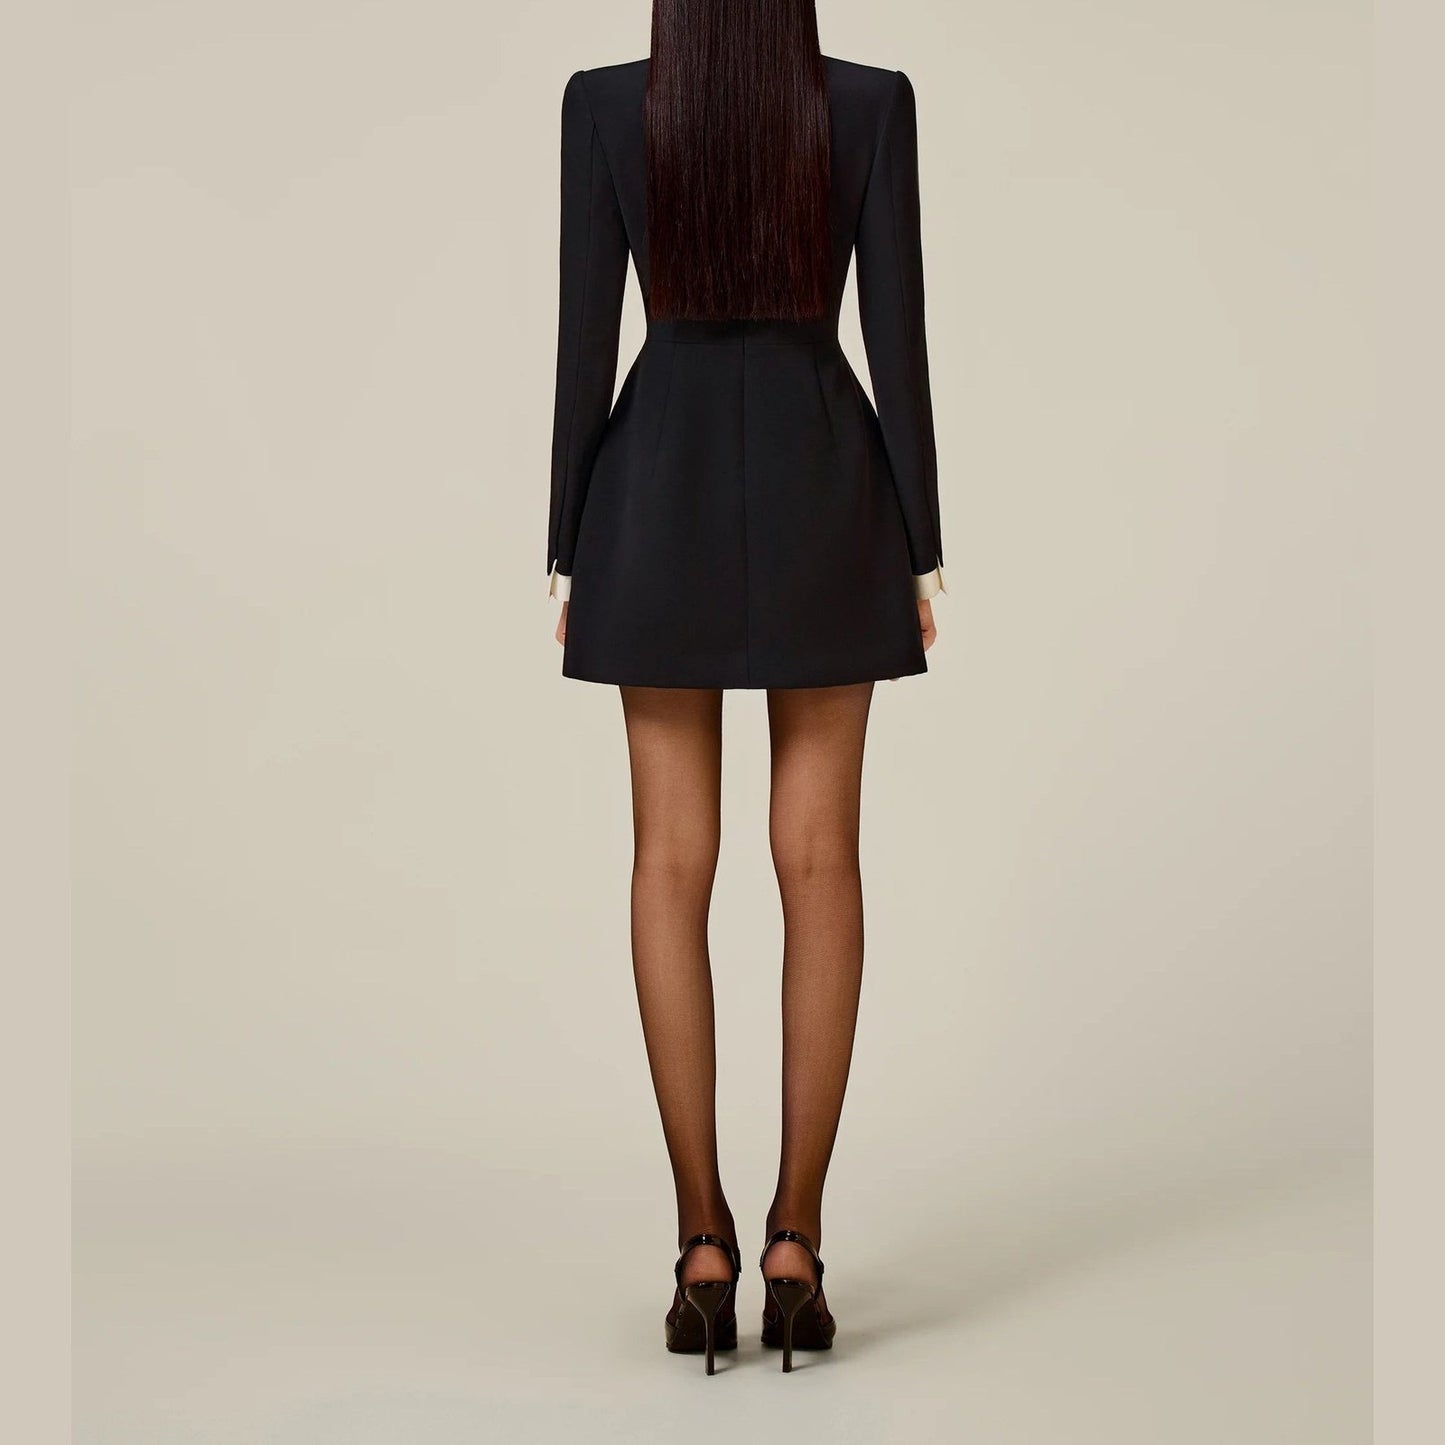 SHANON | Mini Long- Sleeve Black Dress - Cielie